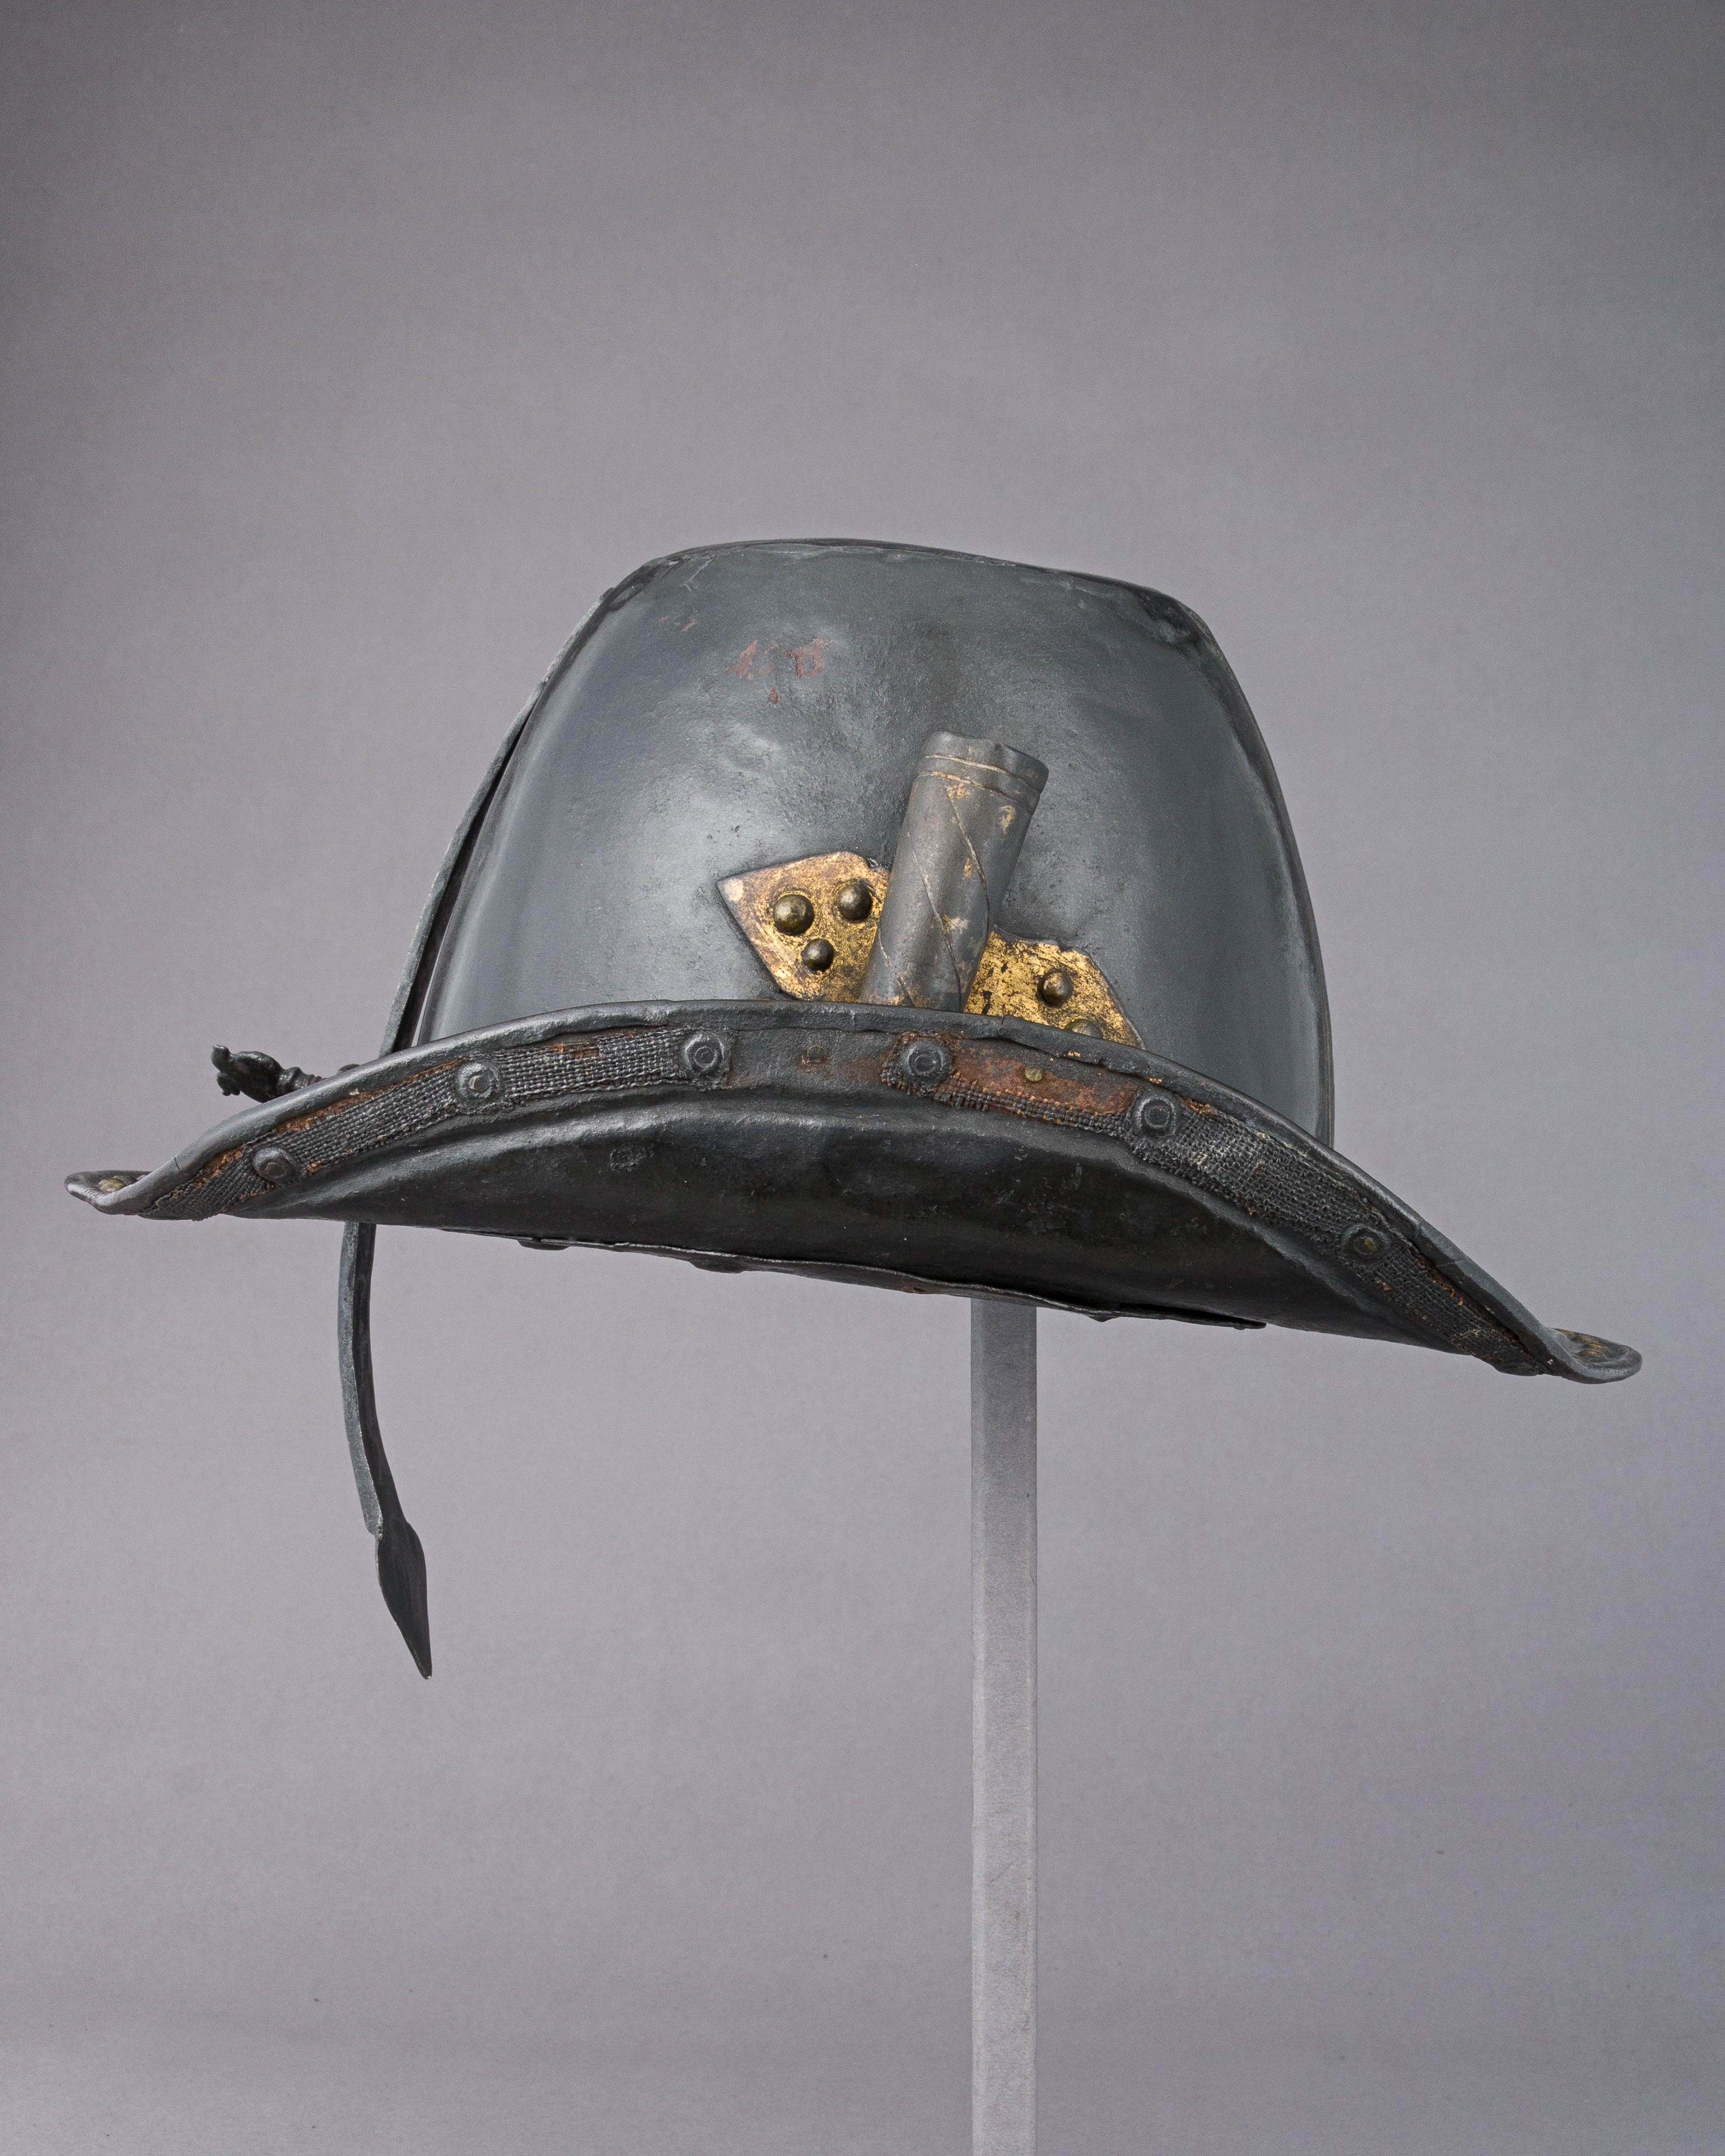 Каска в форме шляпы. Шапель Айзенхут. Шапель де Фер шлем. Айзенхут шлем. Византийский шлем Шапель.